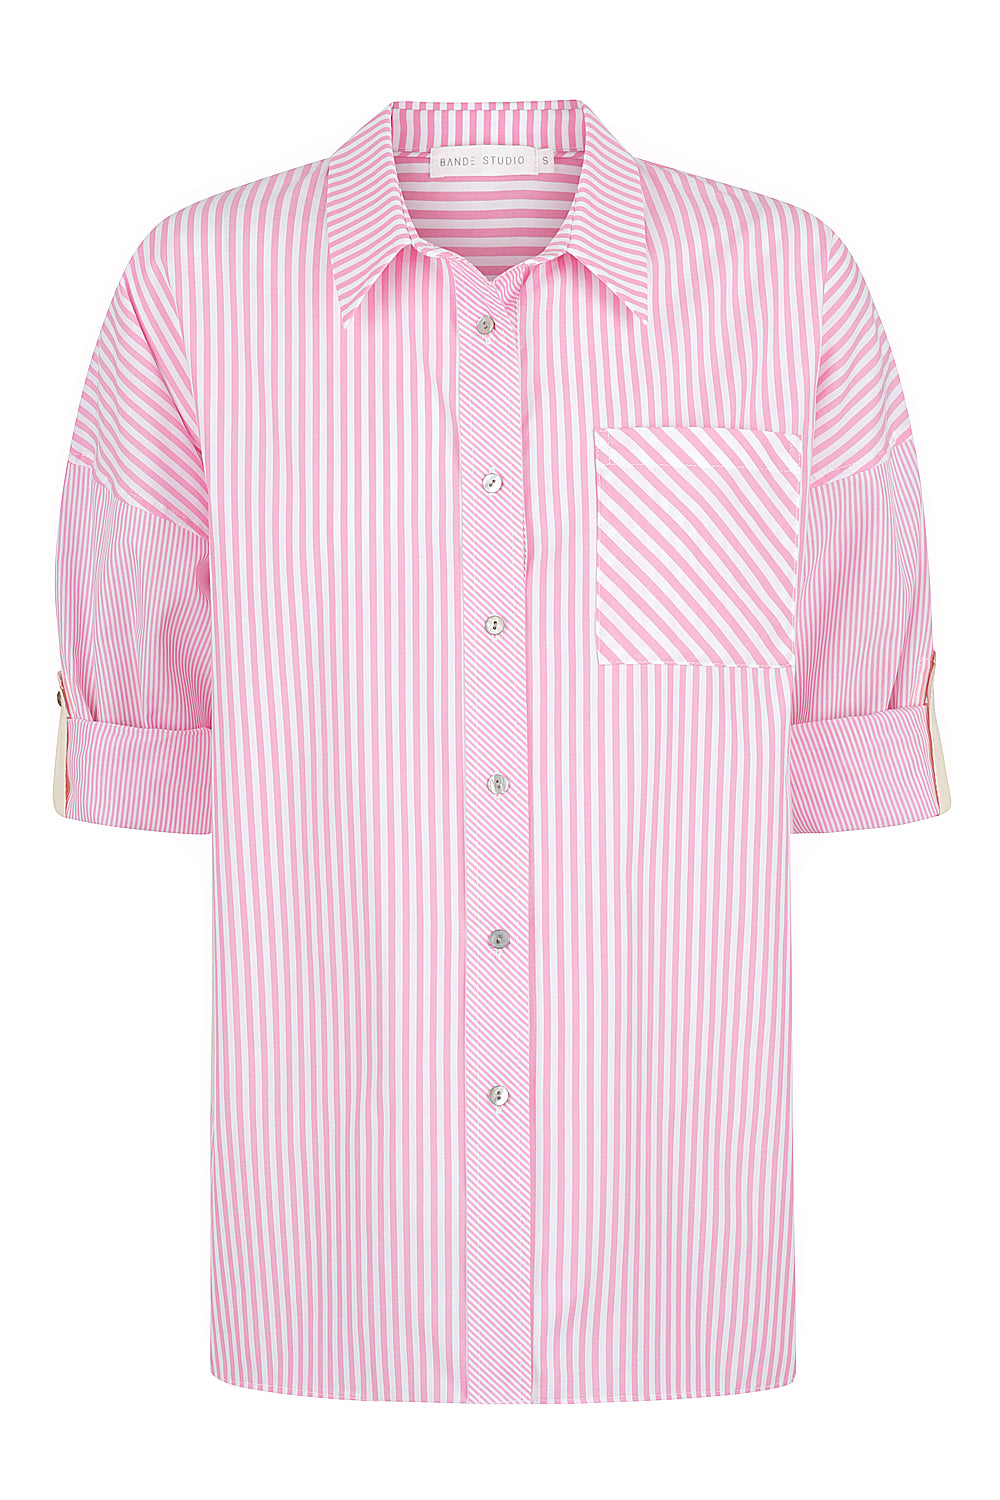 Pinot Stripe Patchwork Shirt